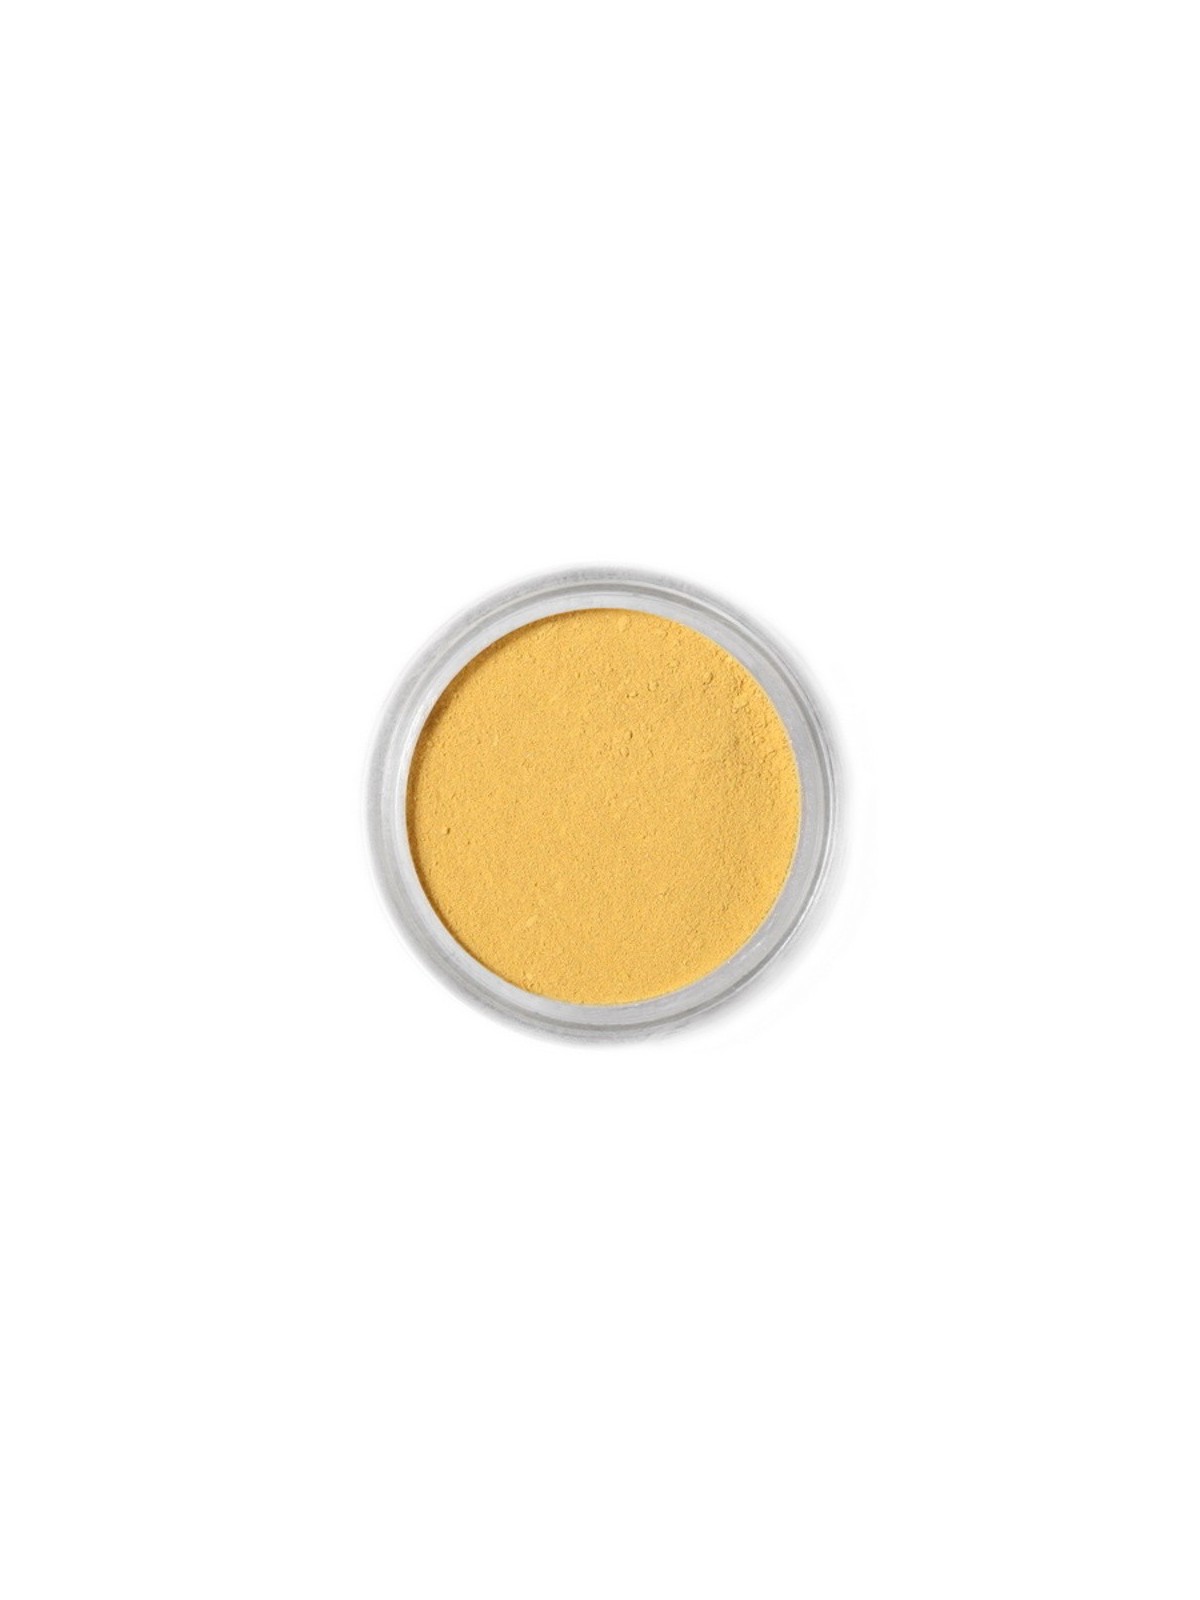 Edible dust color Fractal - Mustard Yellow, Mustarsárga (2 g)